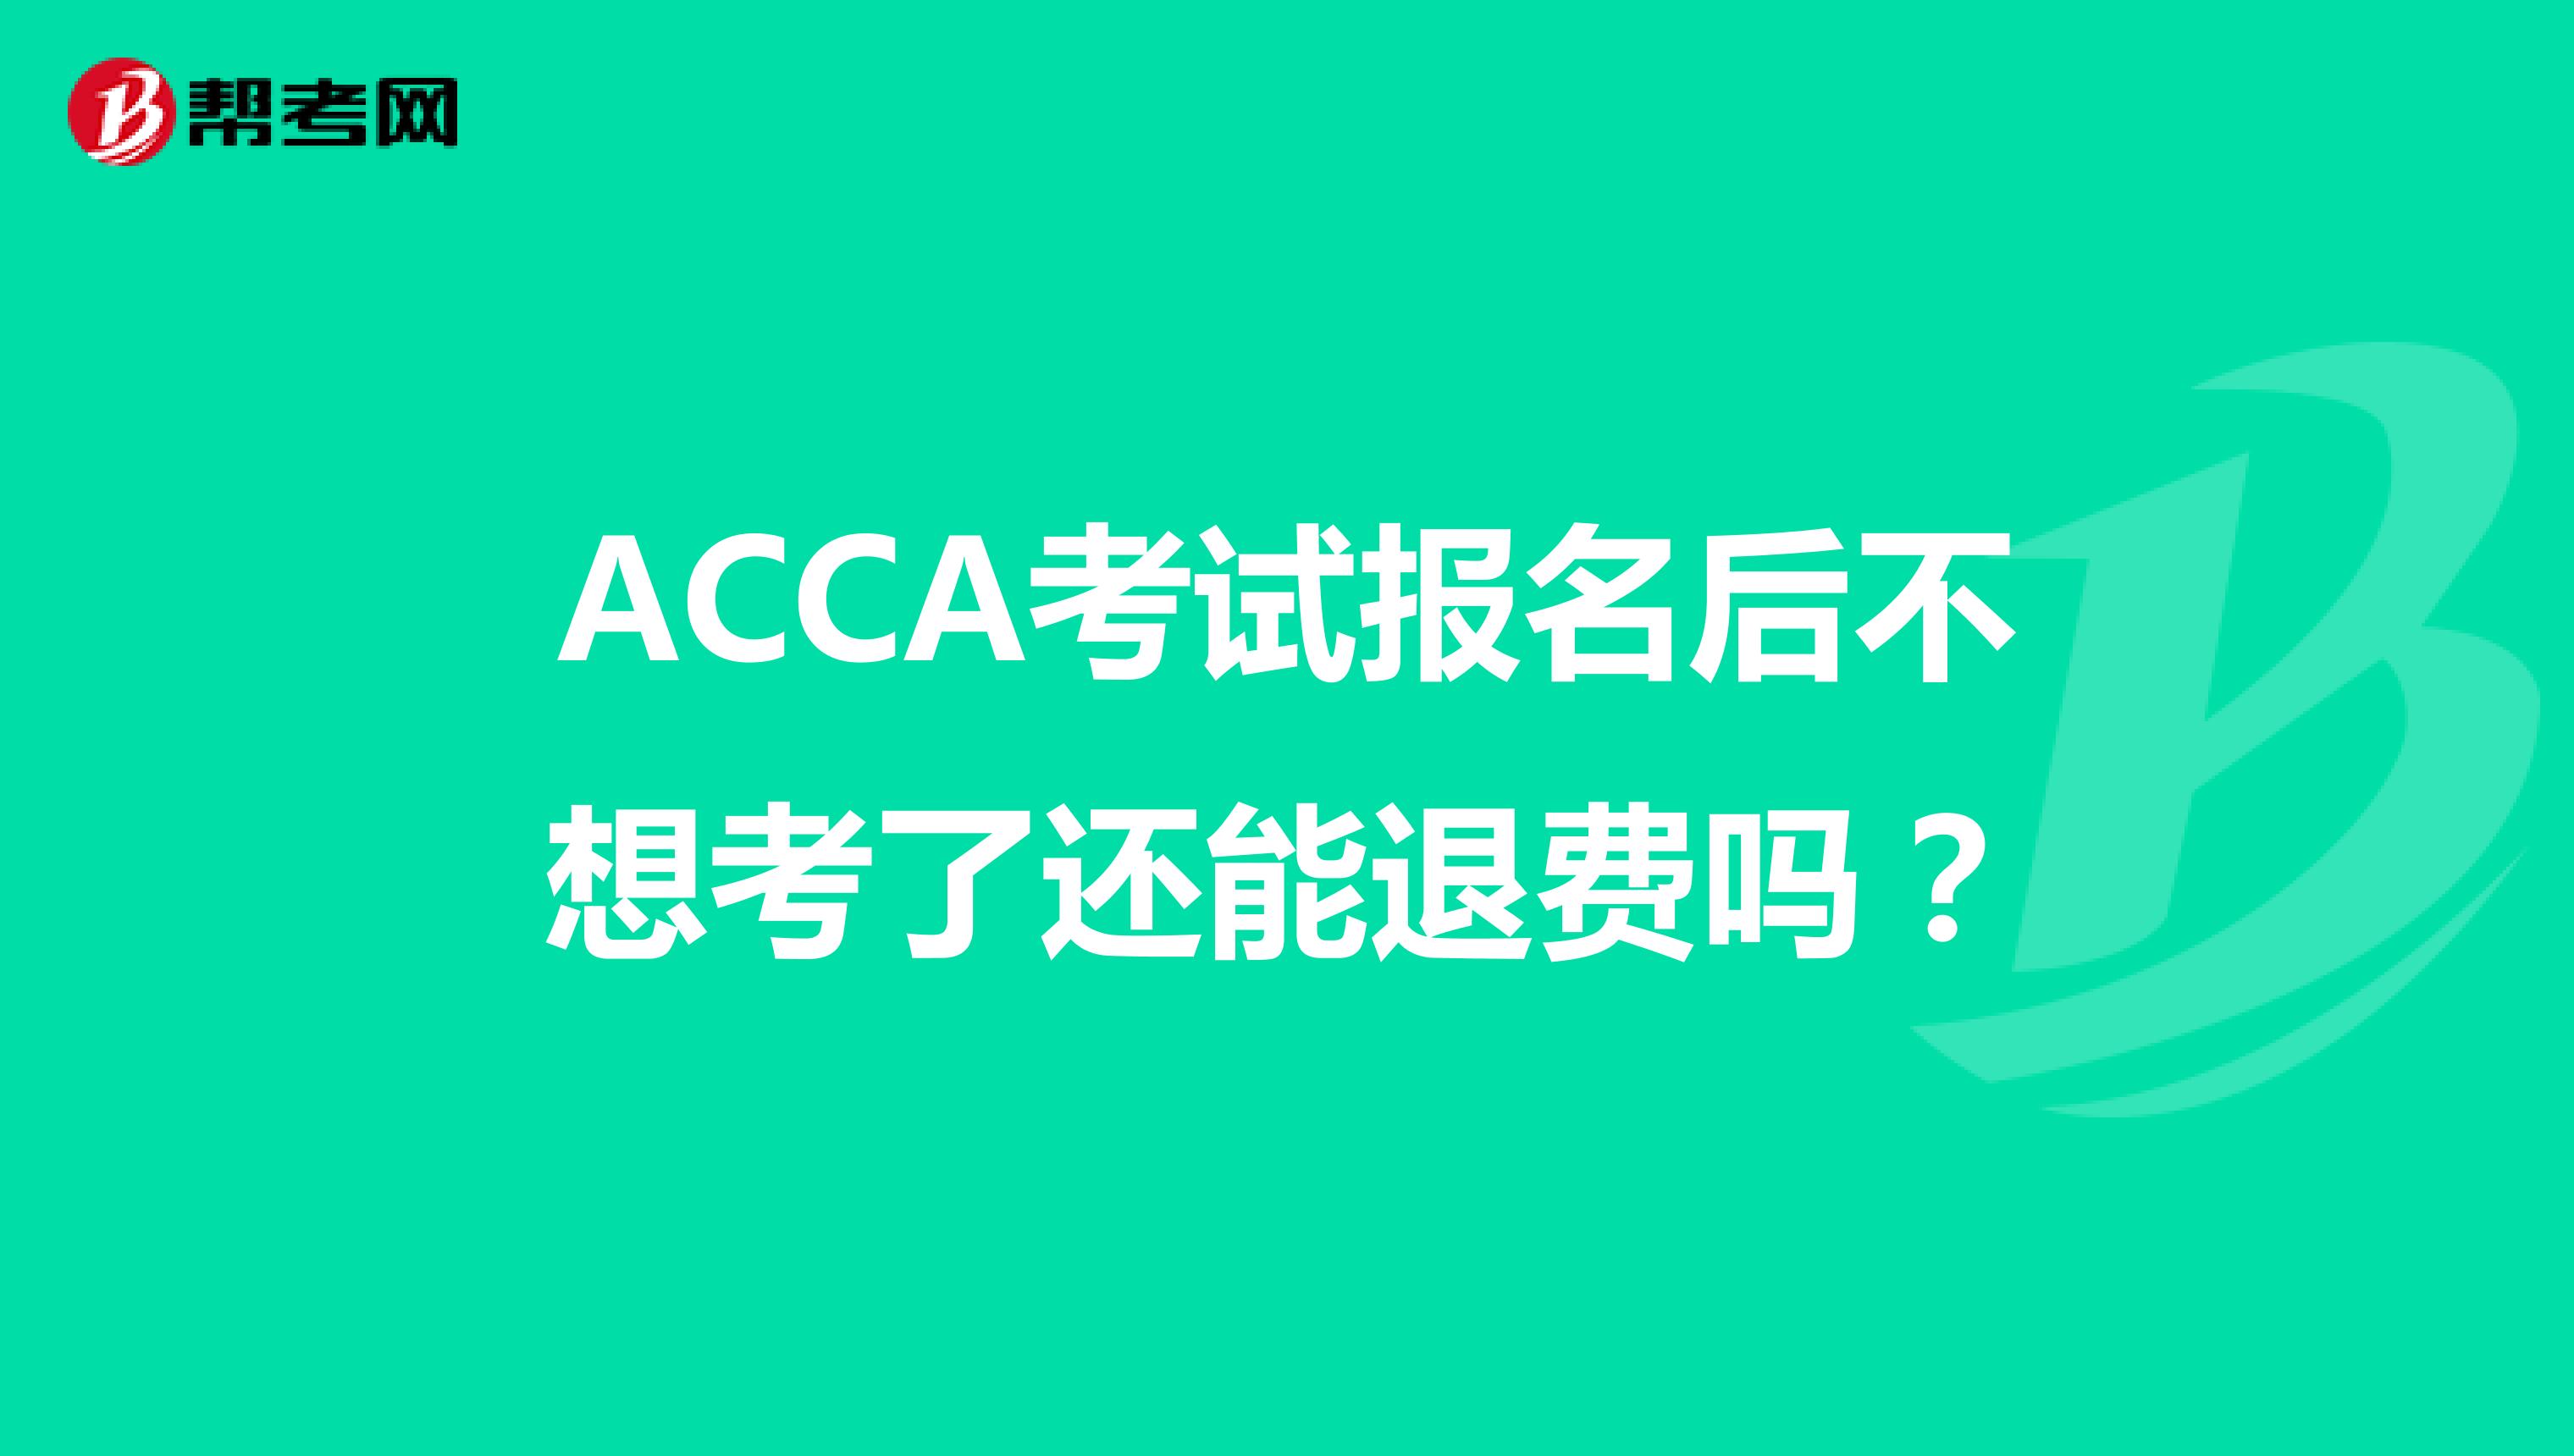 ACCA考试报名后不想考了还能退费吗？